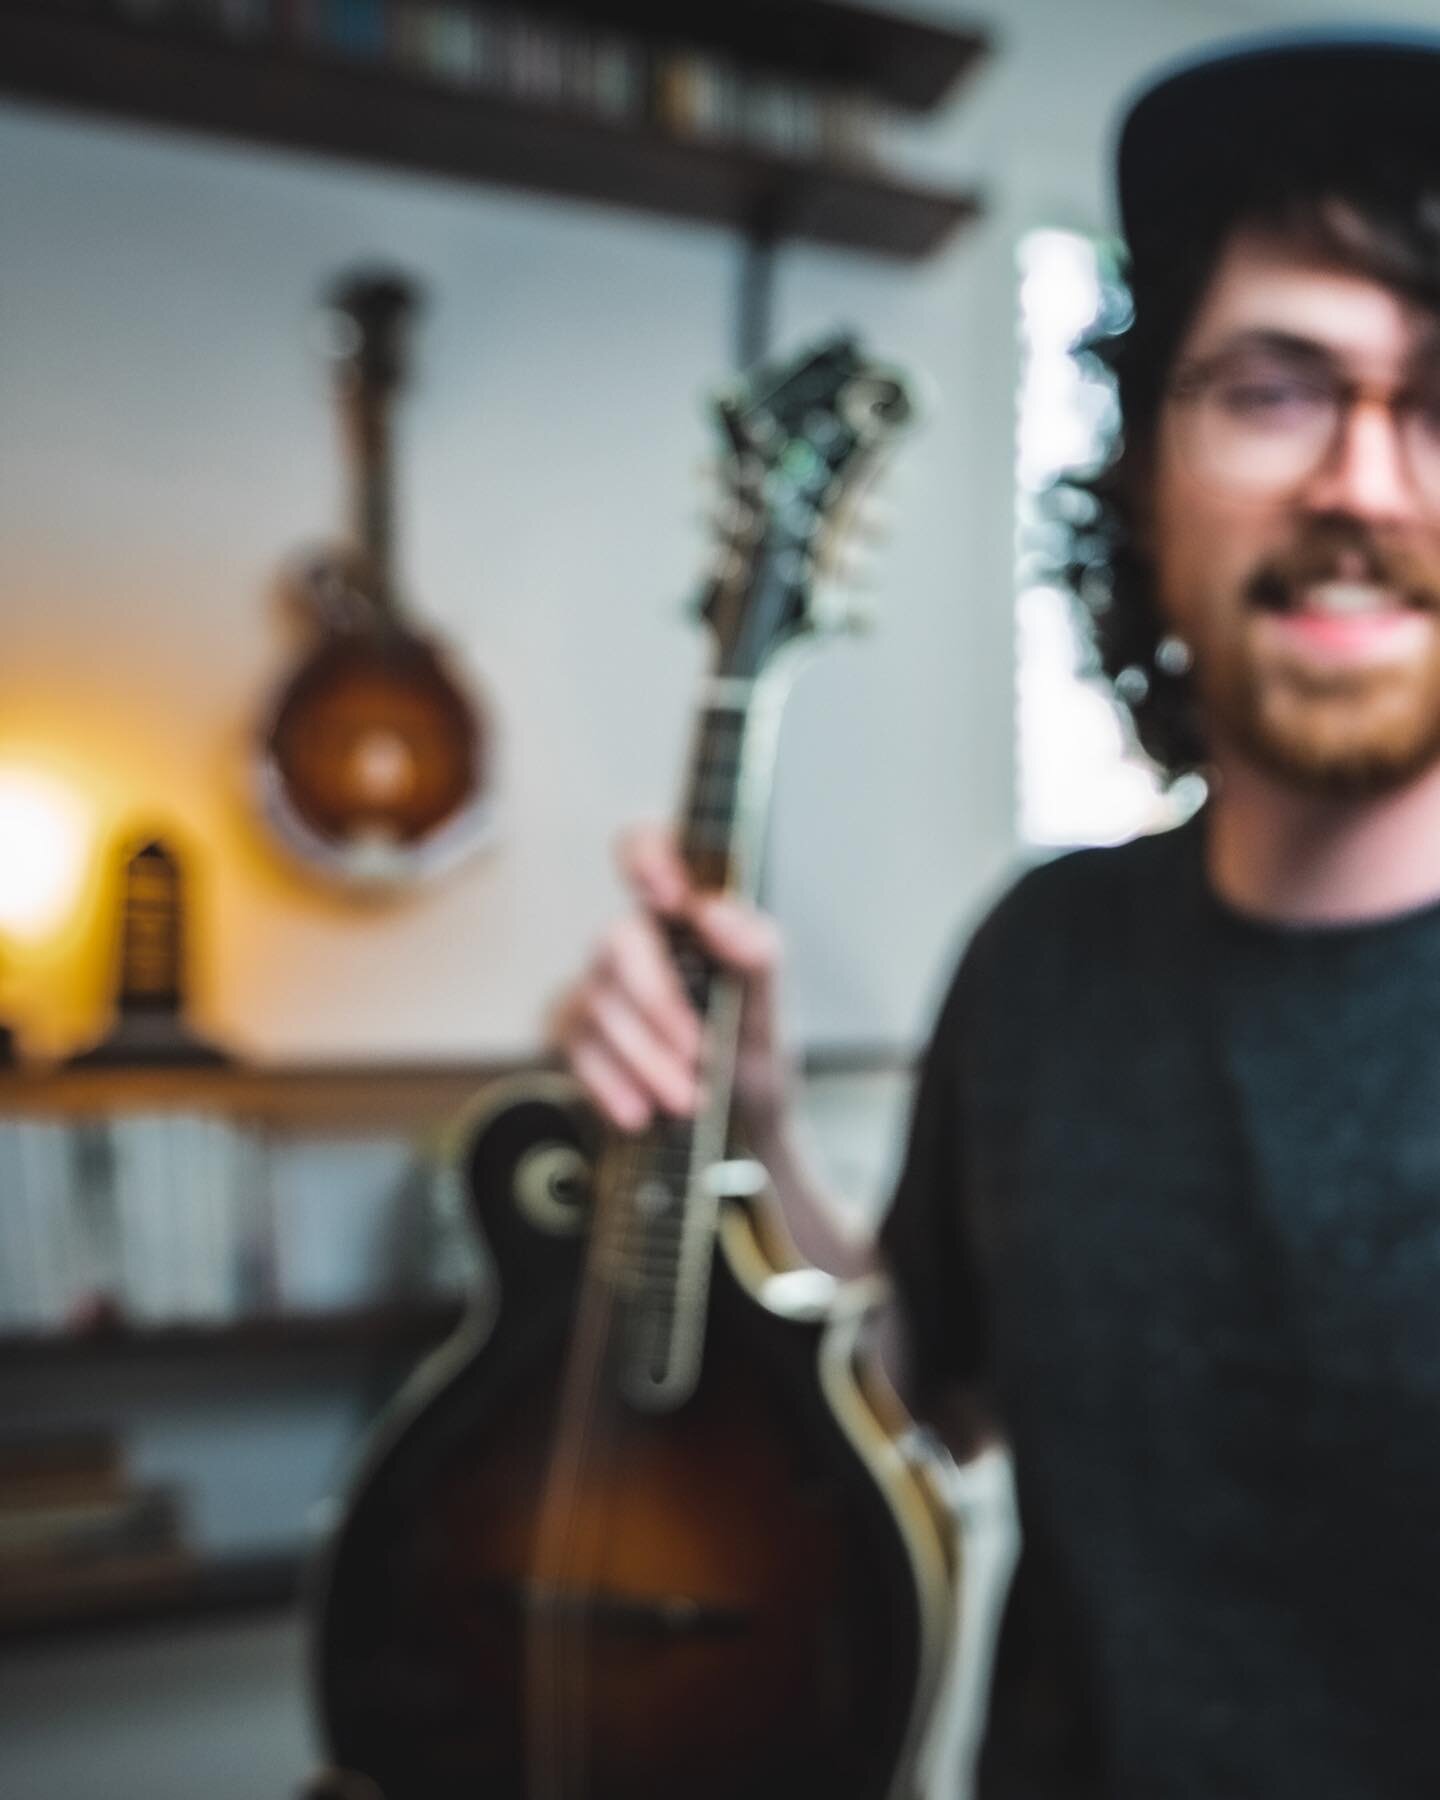 ⬅️ 5 steps coming into focus&hellip; New bluegrass fiddle tune improv video up on the YouTube channel. Link in bio! 

#mandolin #bluegrass #fiddletunes #improv #improvisation